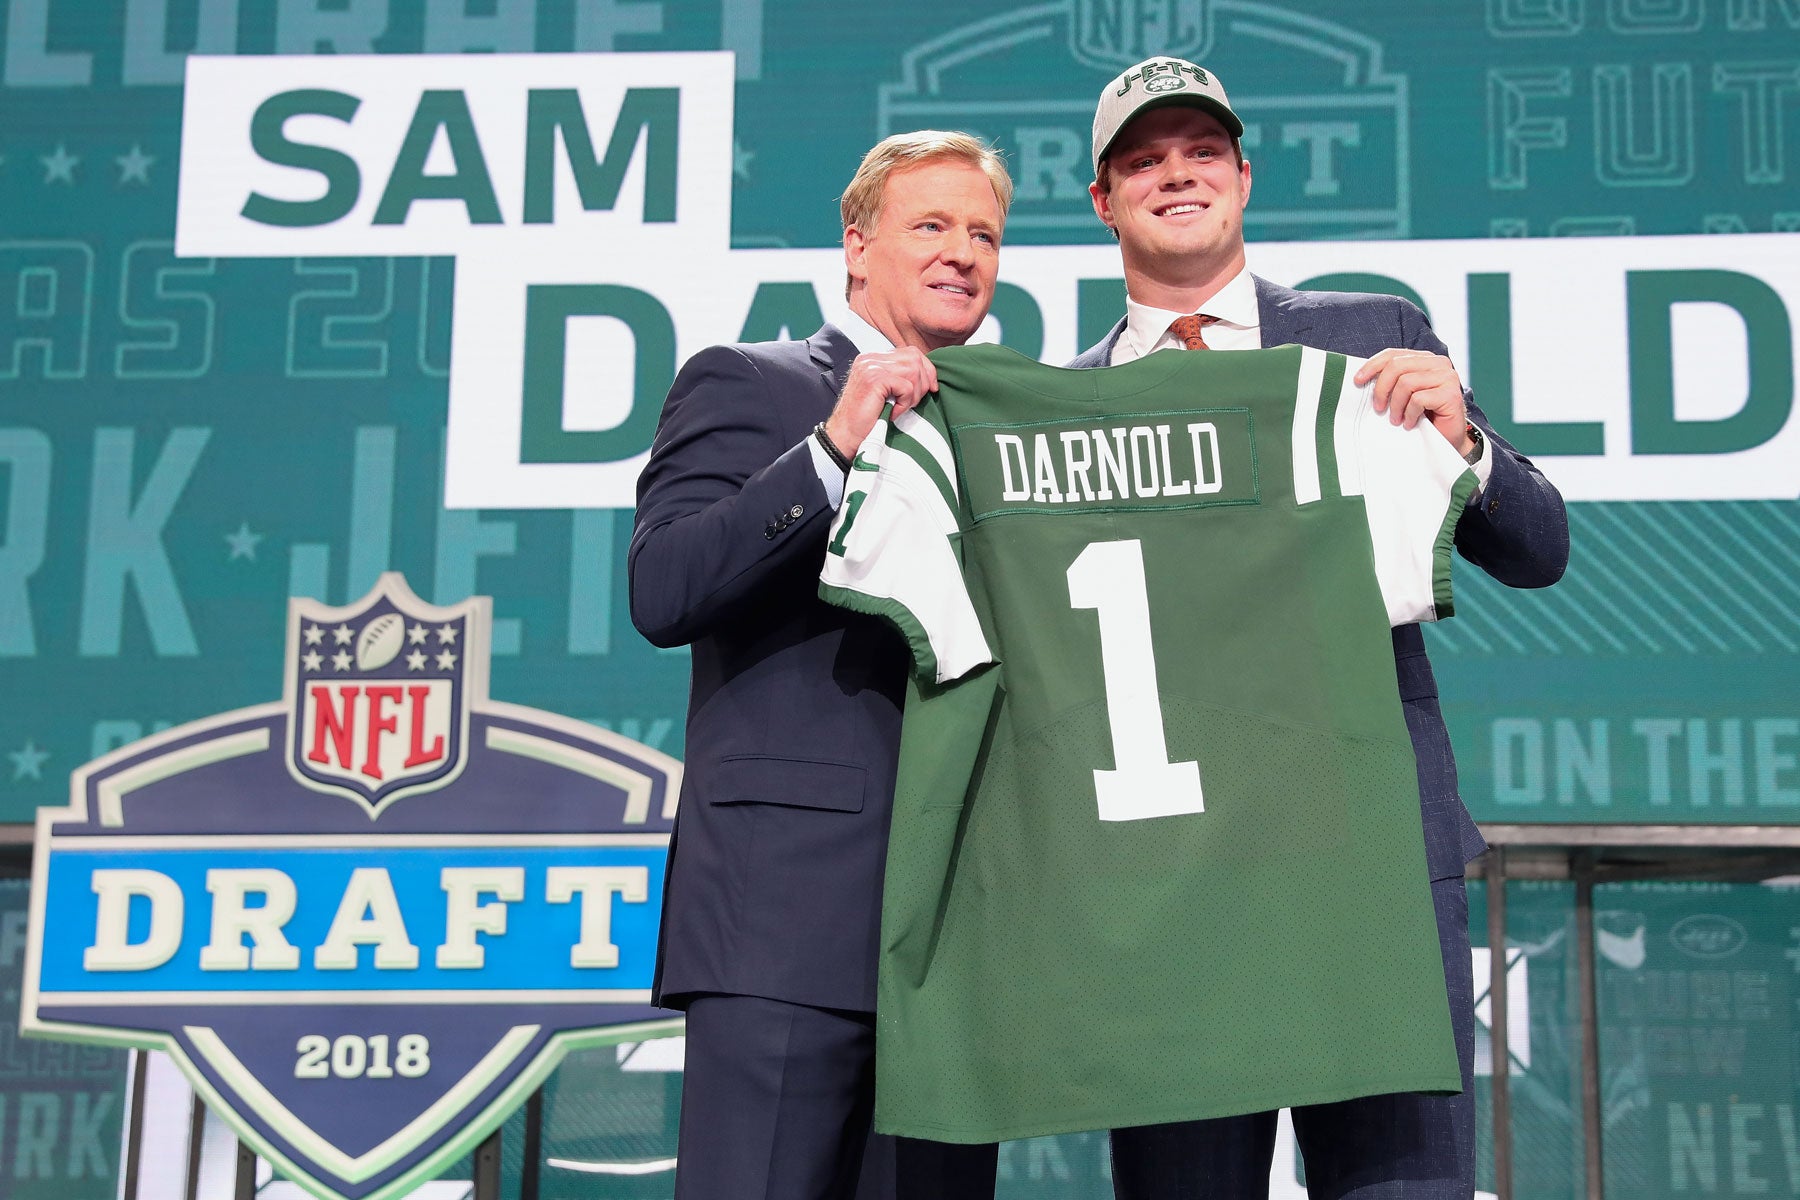 USC sports highlights 2018: Sam Darnold NFL draft